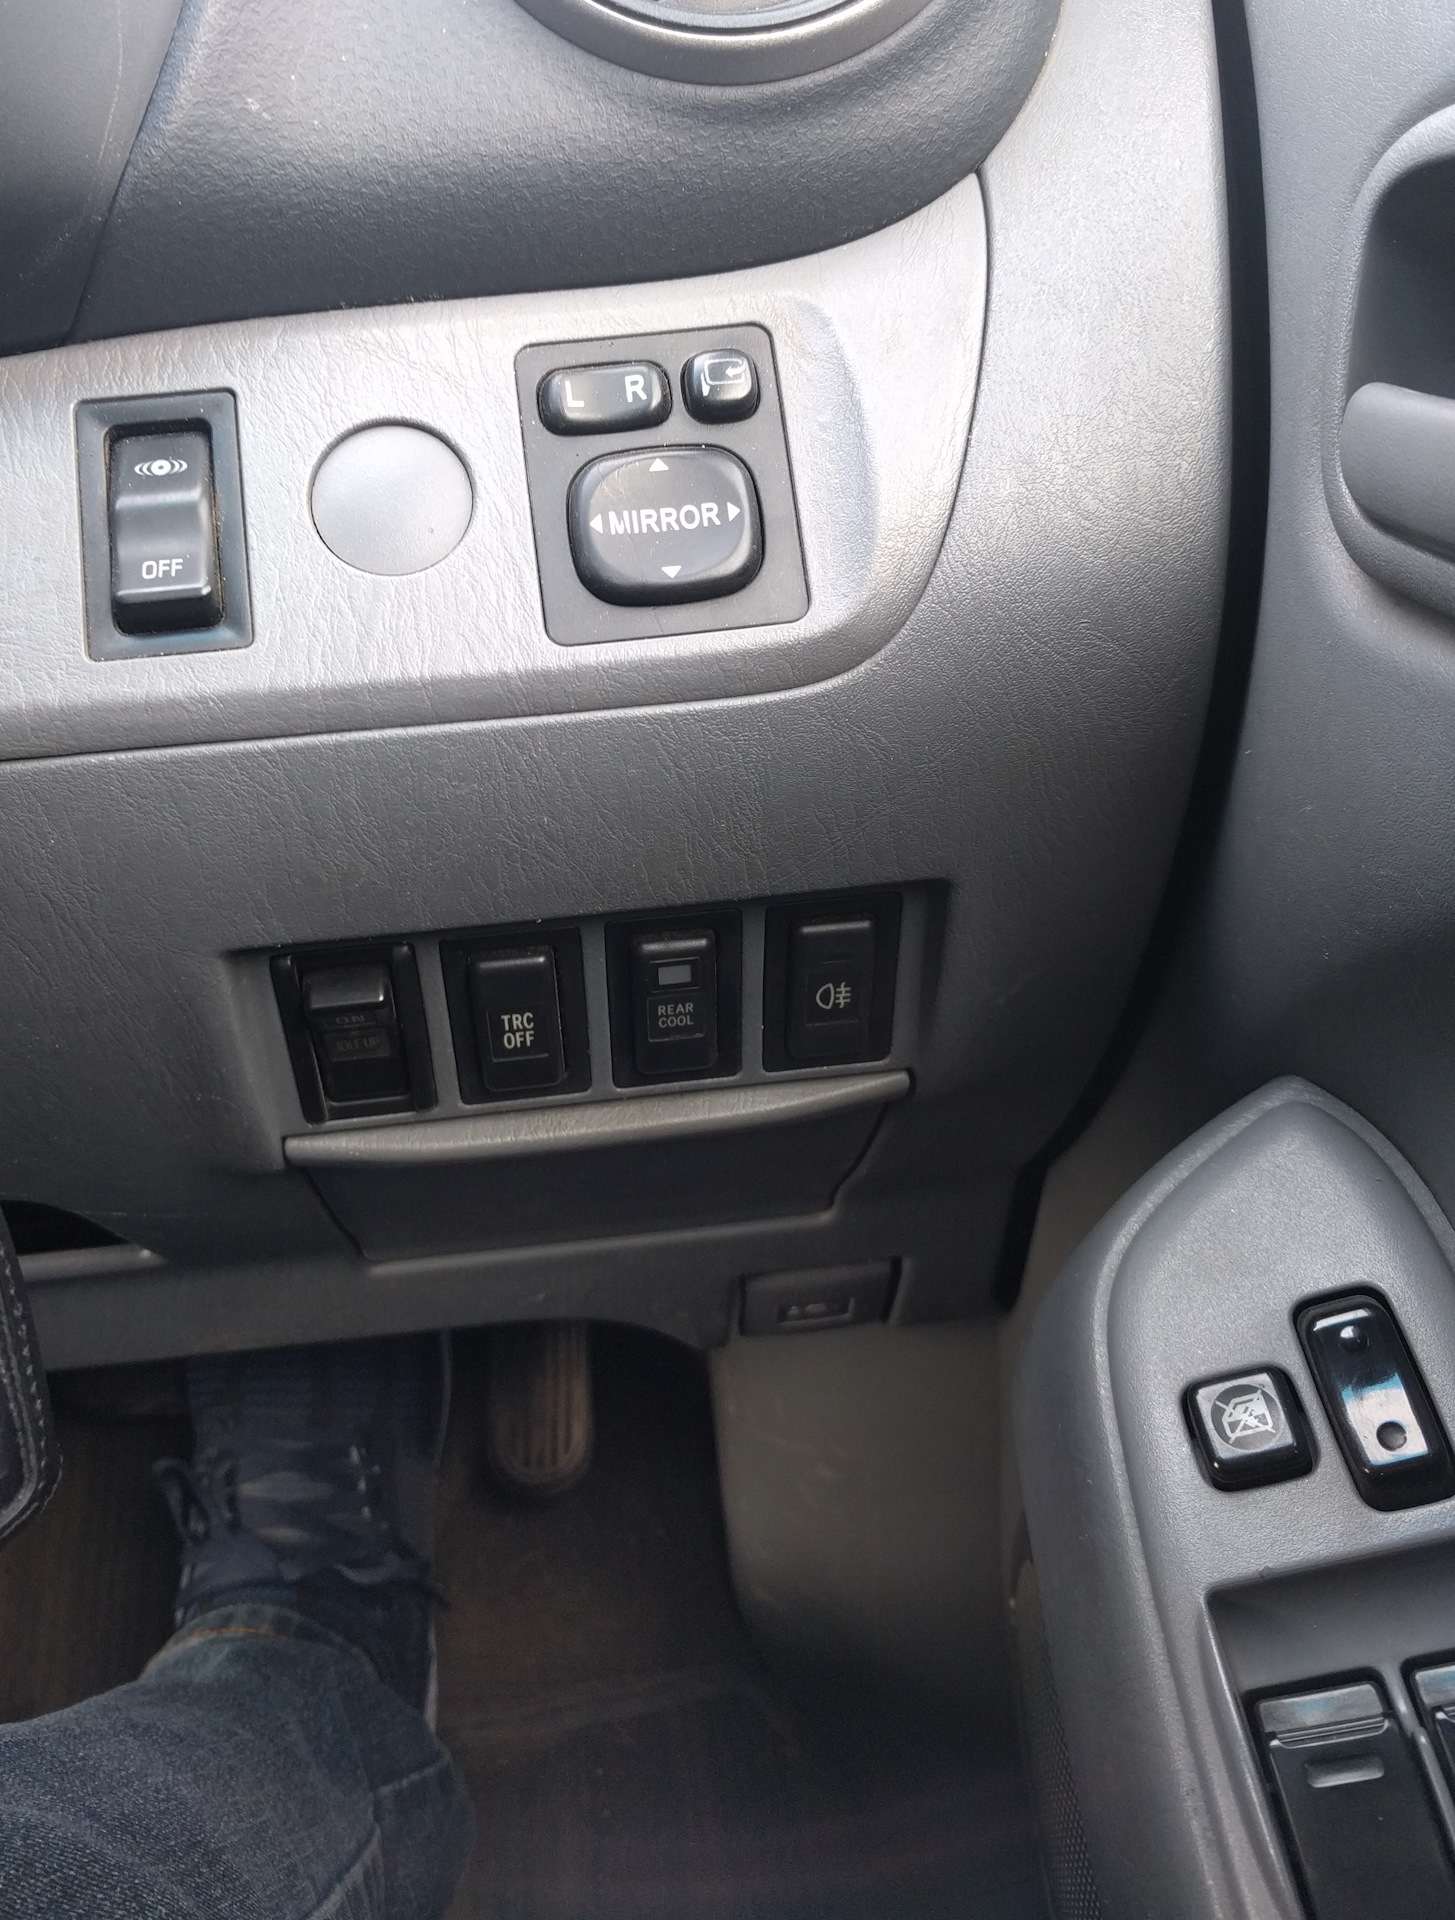 Рав 4 кнопку. Toyota rav4 заглушка кнопки. Заглушка кнопки Тойота рав 4. Rav4 2020 заглушка кнопки. Кнопка для Тойота рав 4.